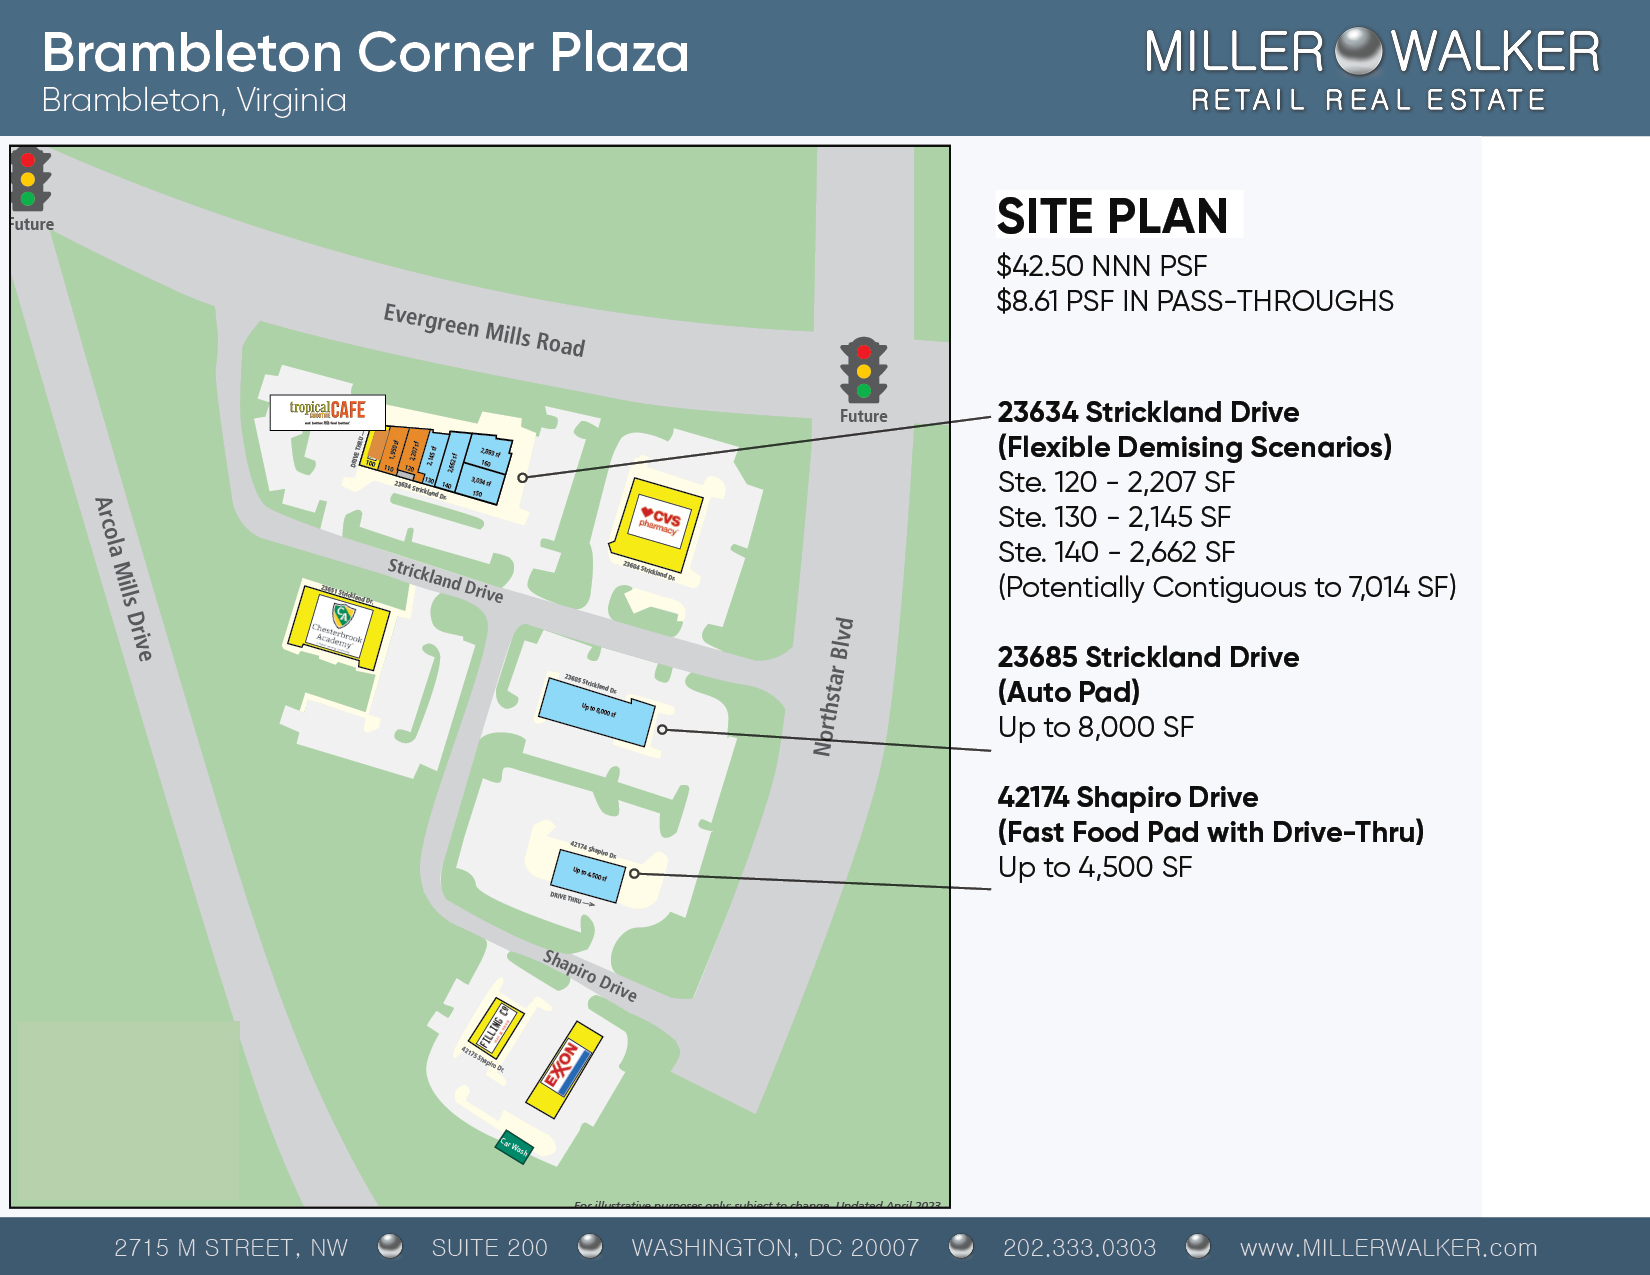 Brambleton corner plaza showing multiple retail restaurant spaces and properties for lease in Brambleton Virginia